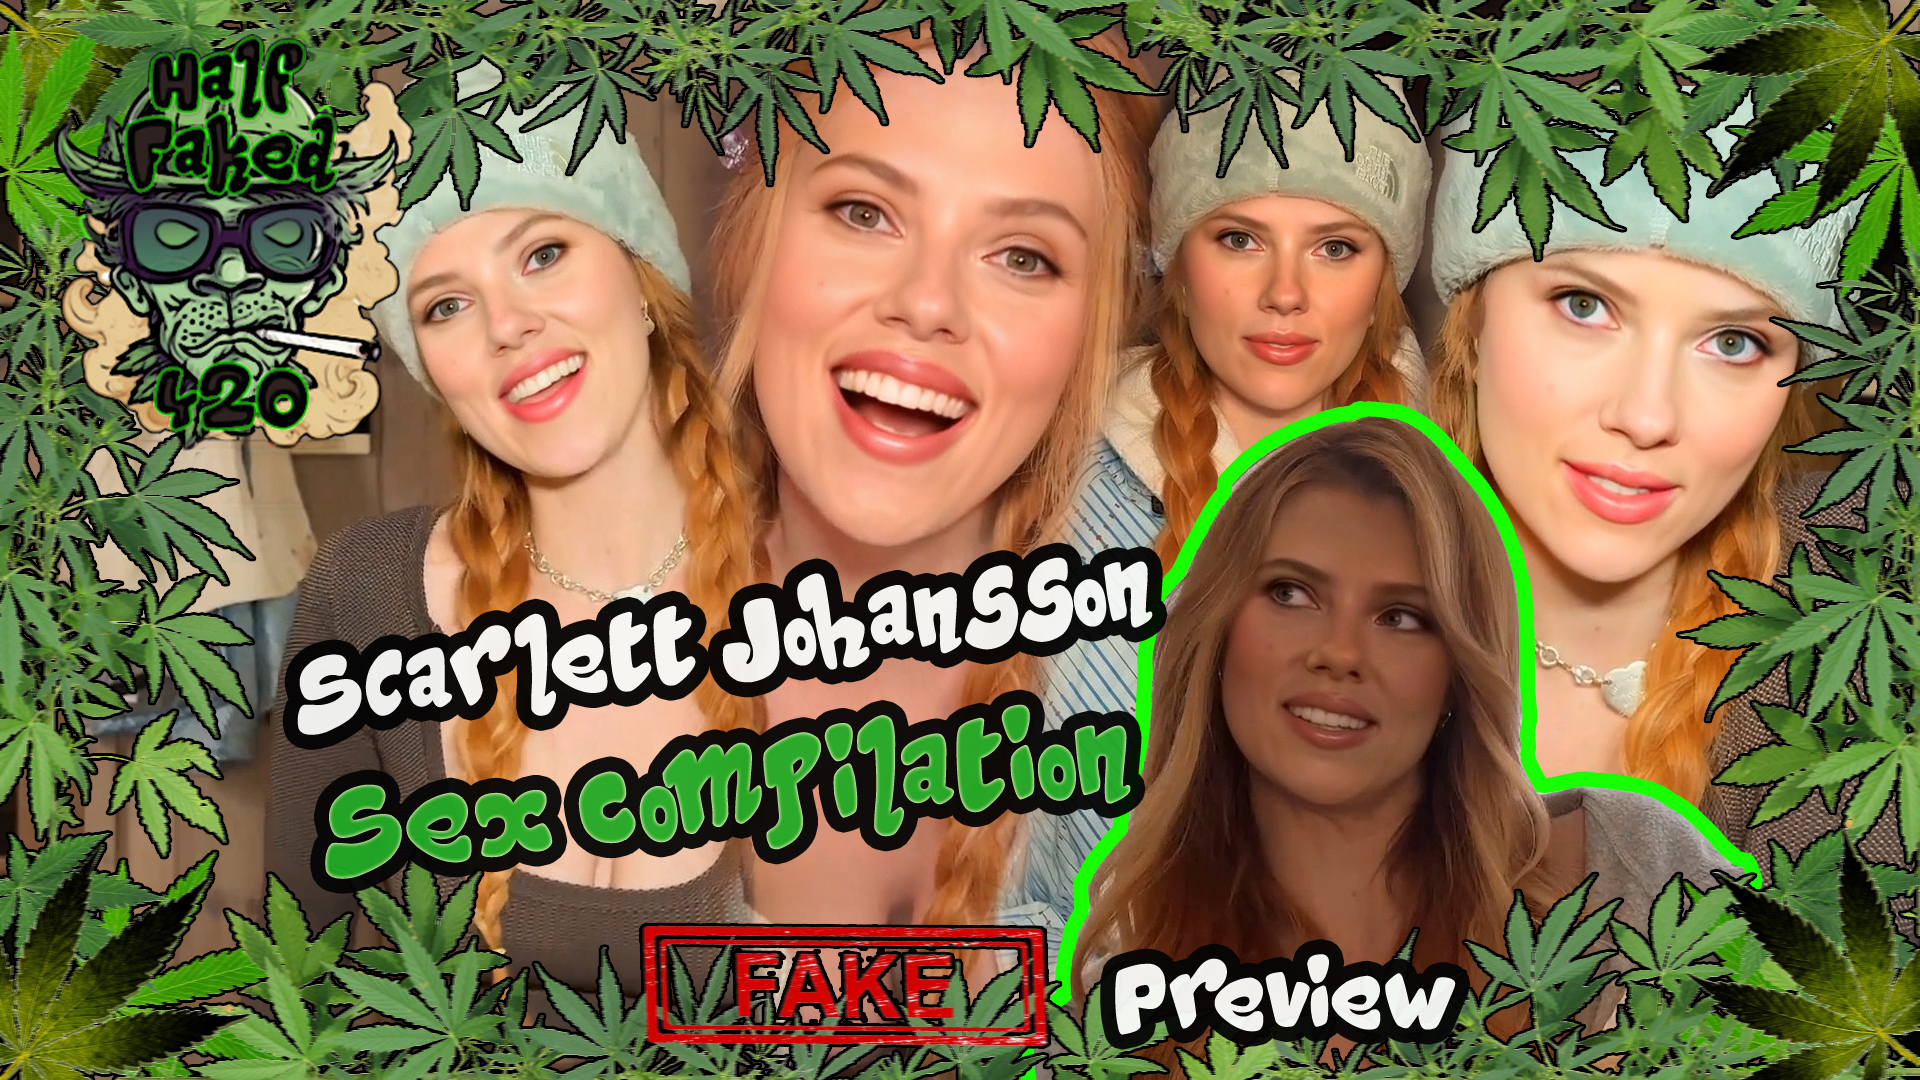 Scarlett Johansson - Sex Compilation | PREVIEW (35:01) | FAKE